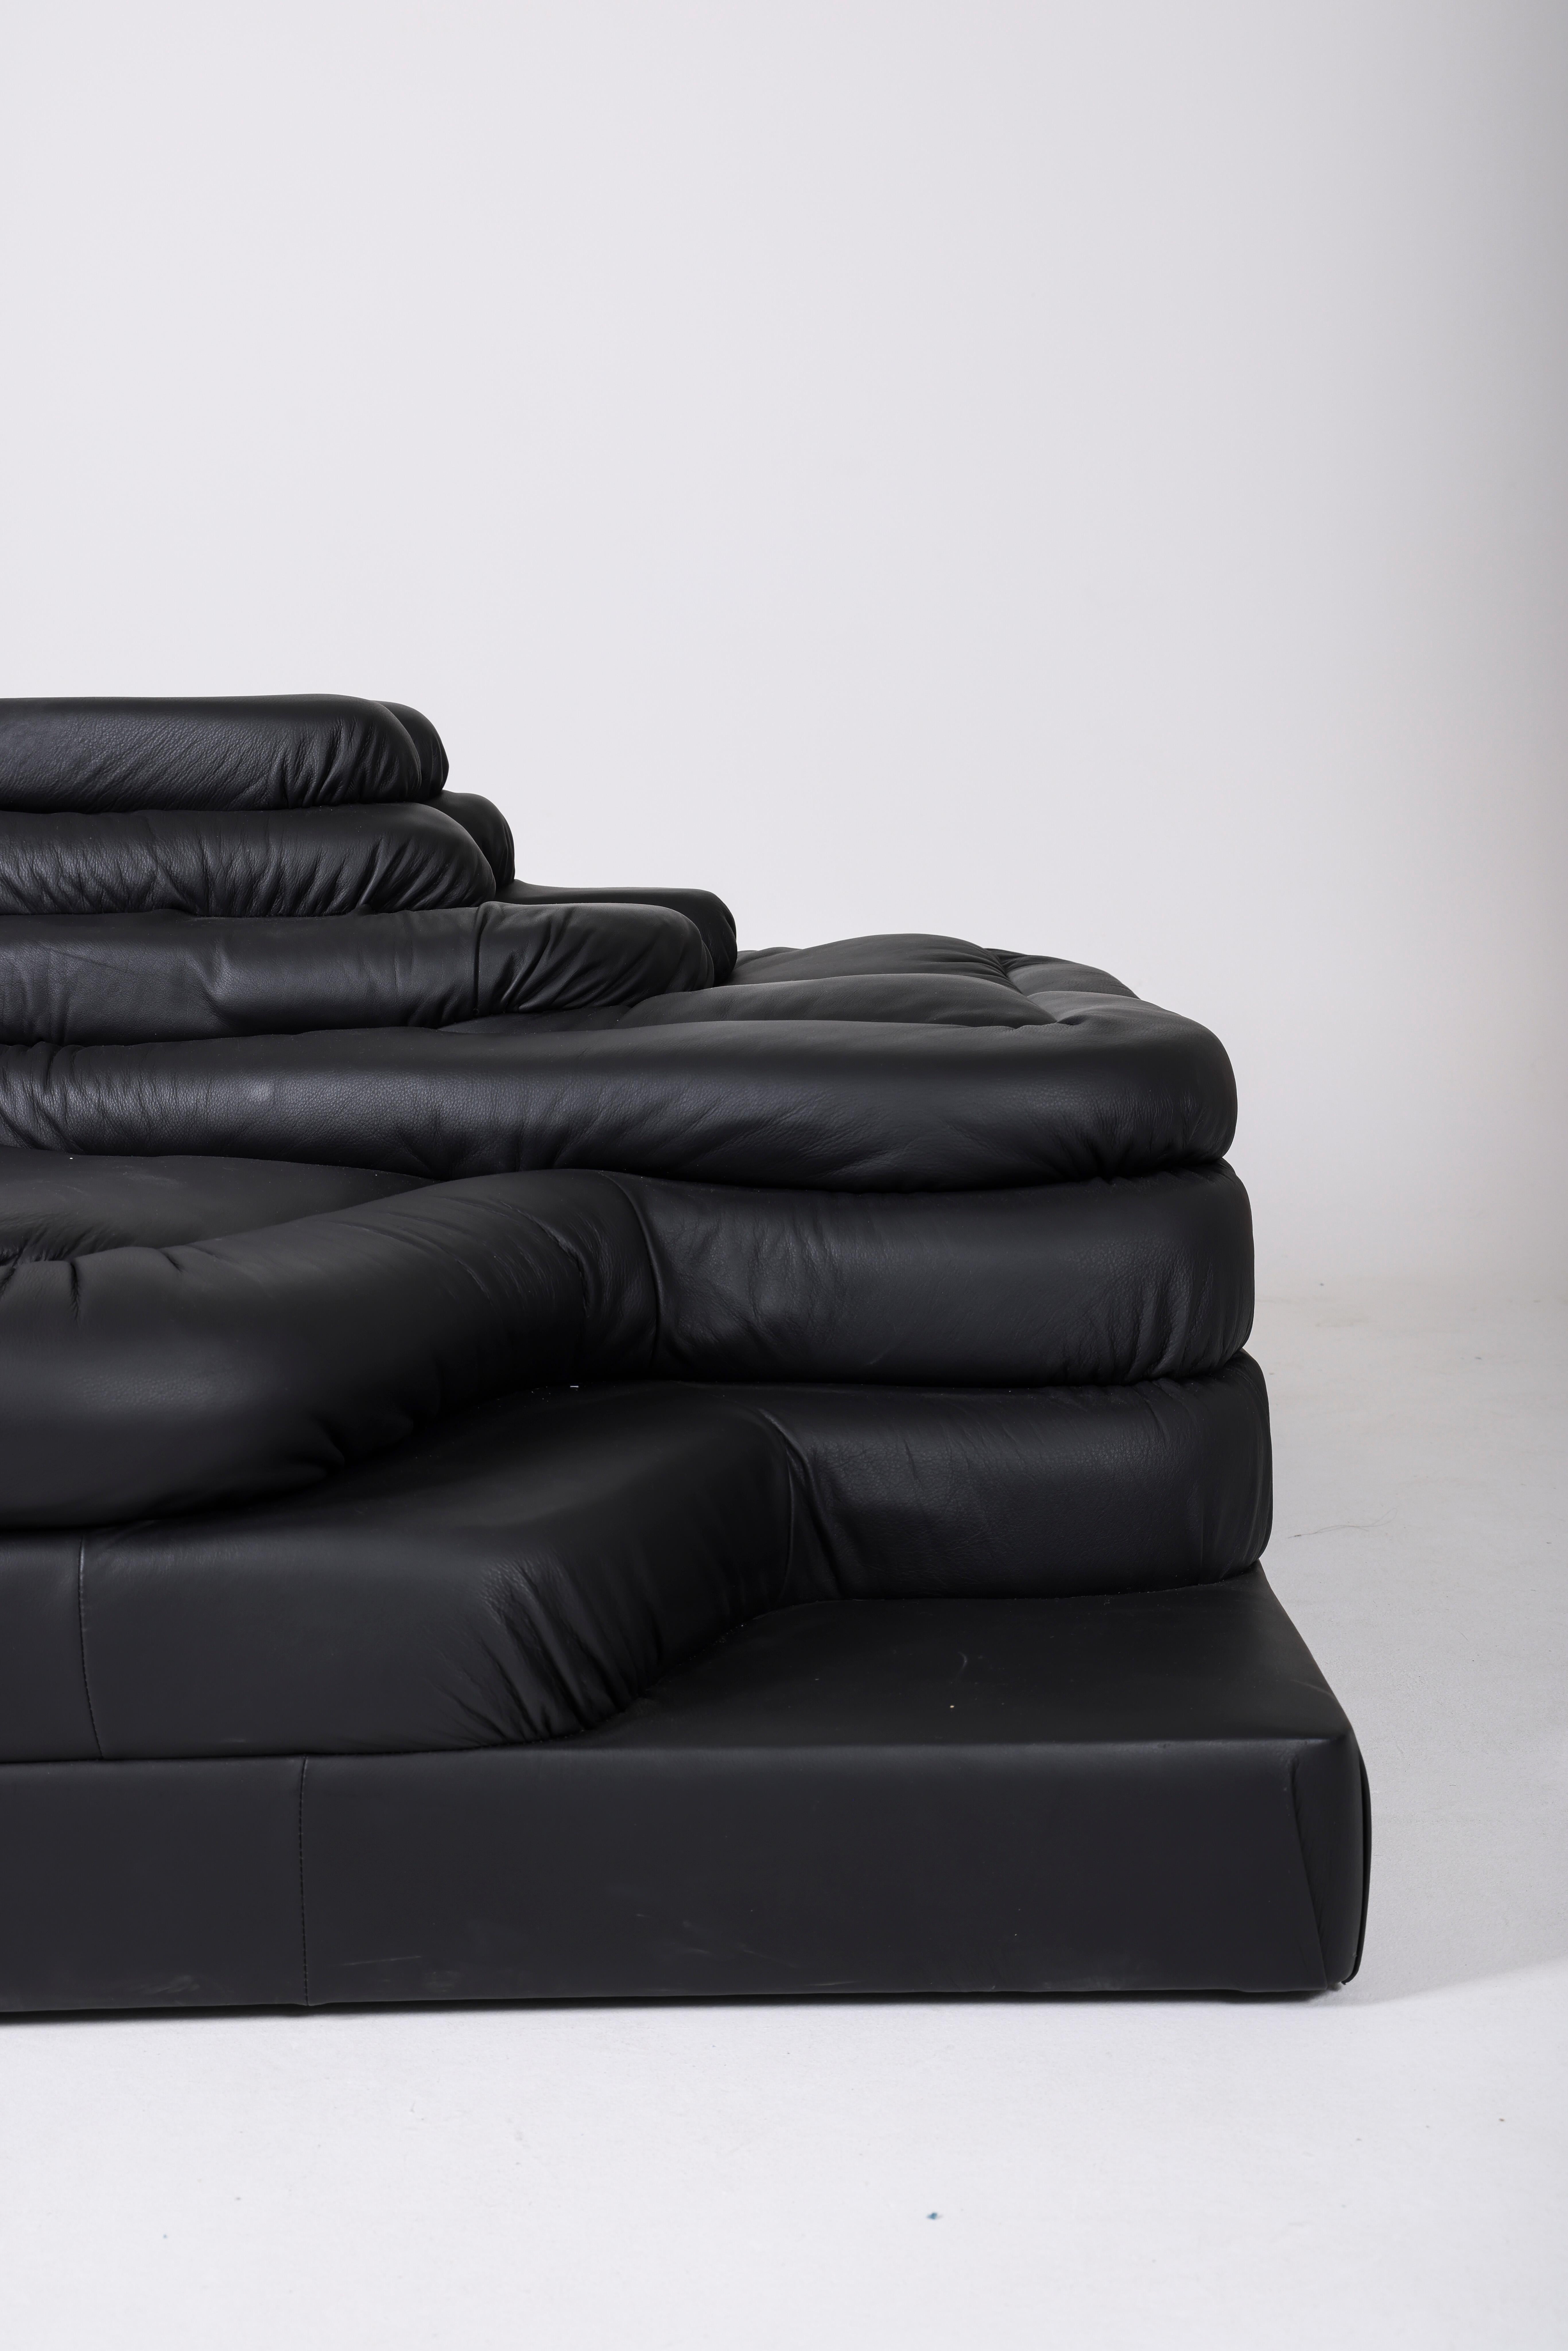 20th Century Black leather sofa Terrazza Ubald For Sale